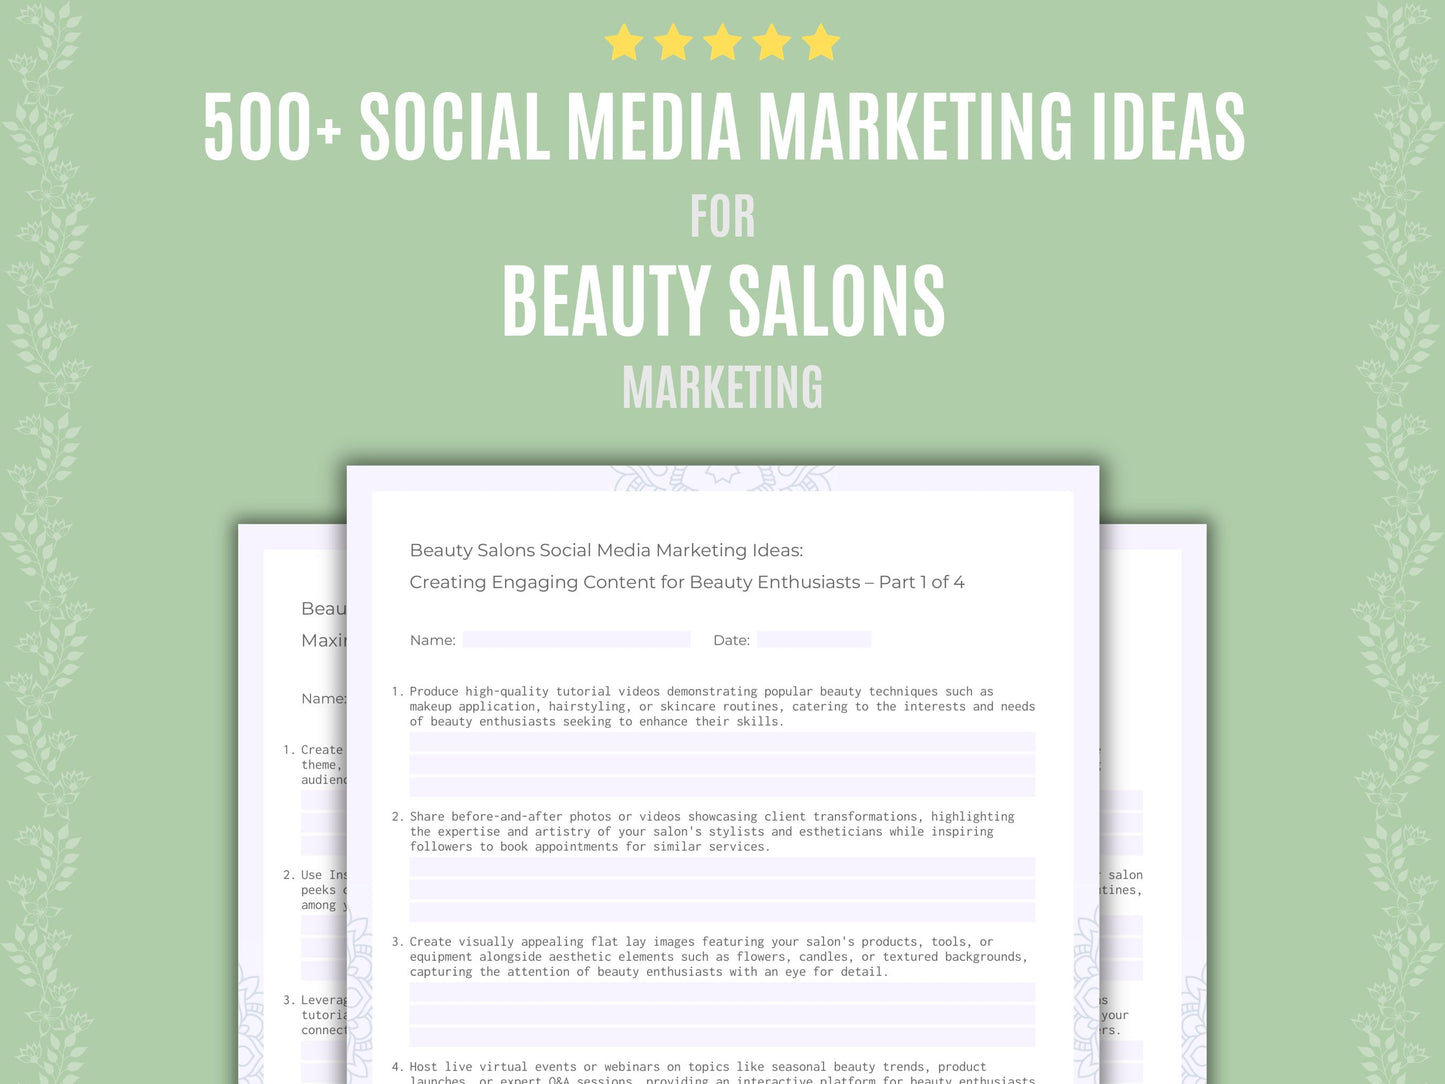 Beauty Salons Marketing Workbook